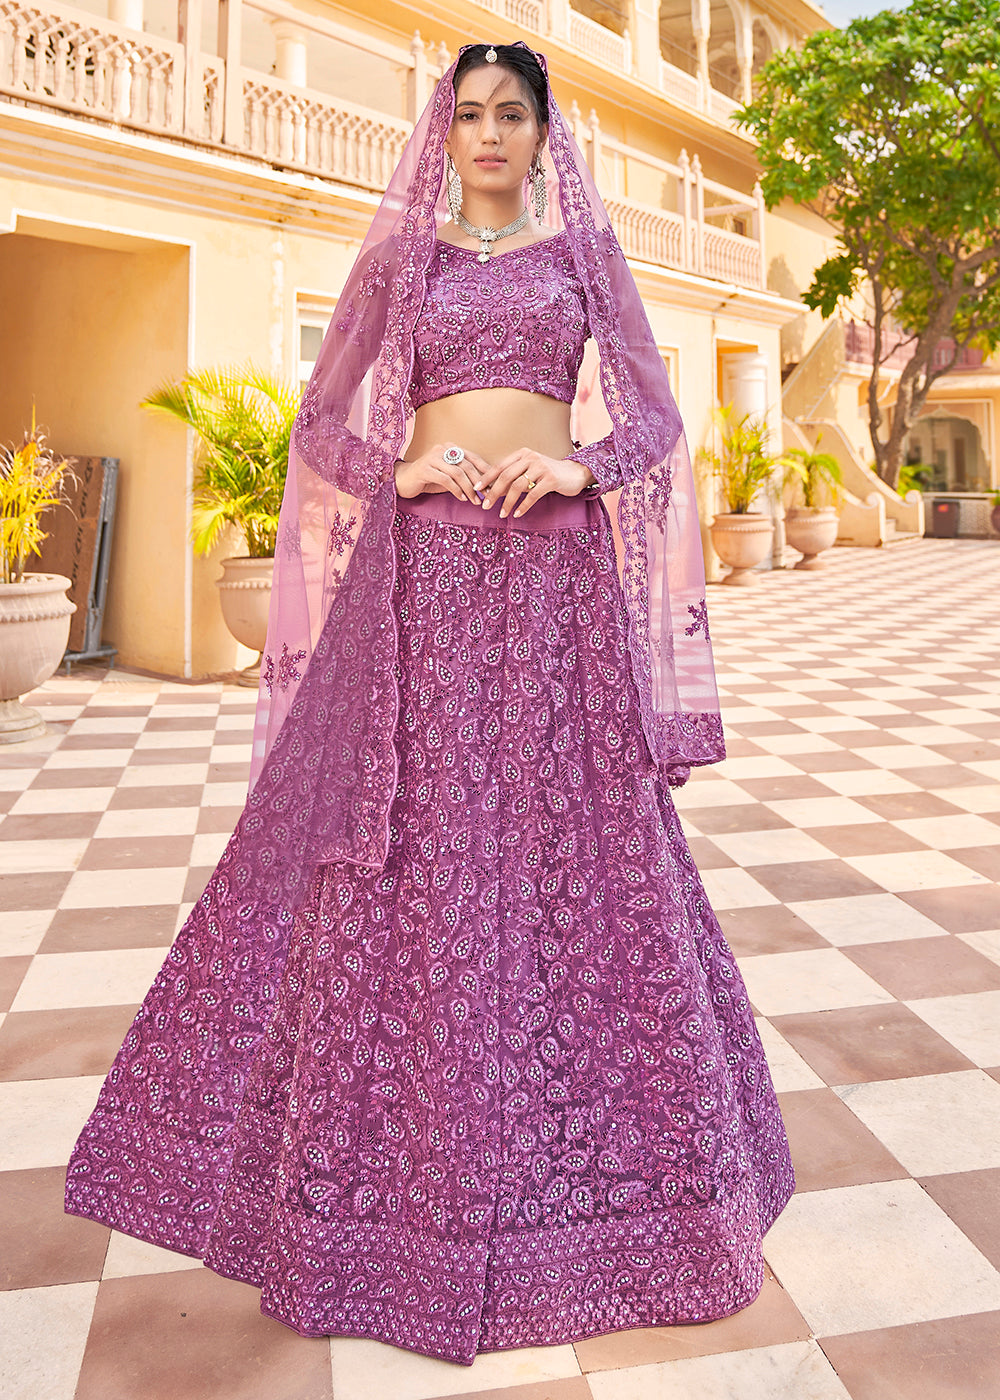 Buy Now Wedding Wear Purple Heavy Embroidered Bridal Lehenga Choli Online in USA, UK, Canada & Worldwide at Empress Clothing.